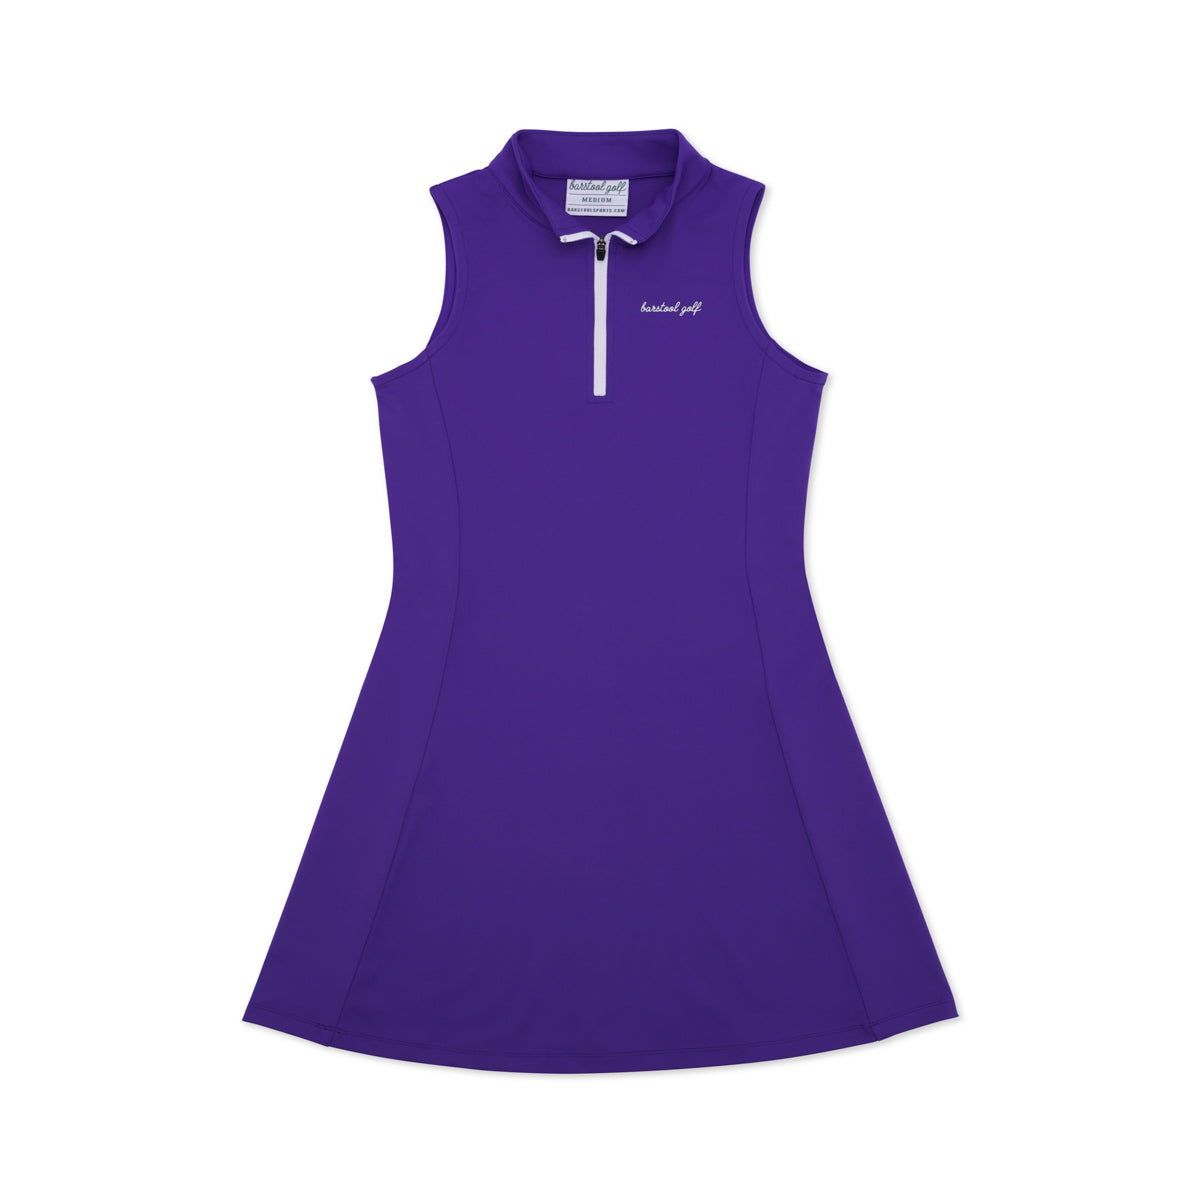 Barstool Golf Women's Quarter Zip Dress-Dresses-Fore Play-Barstool Sports